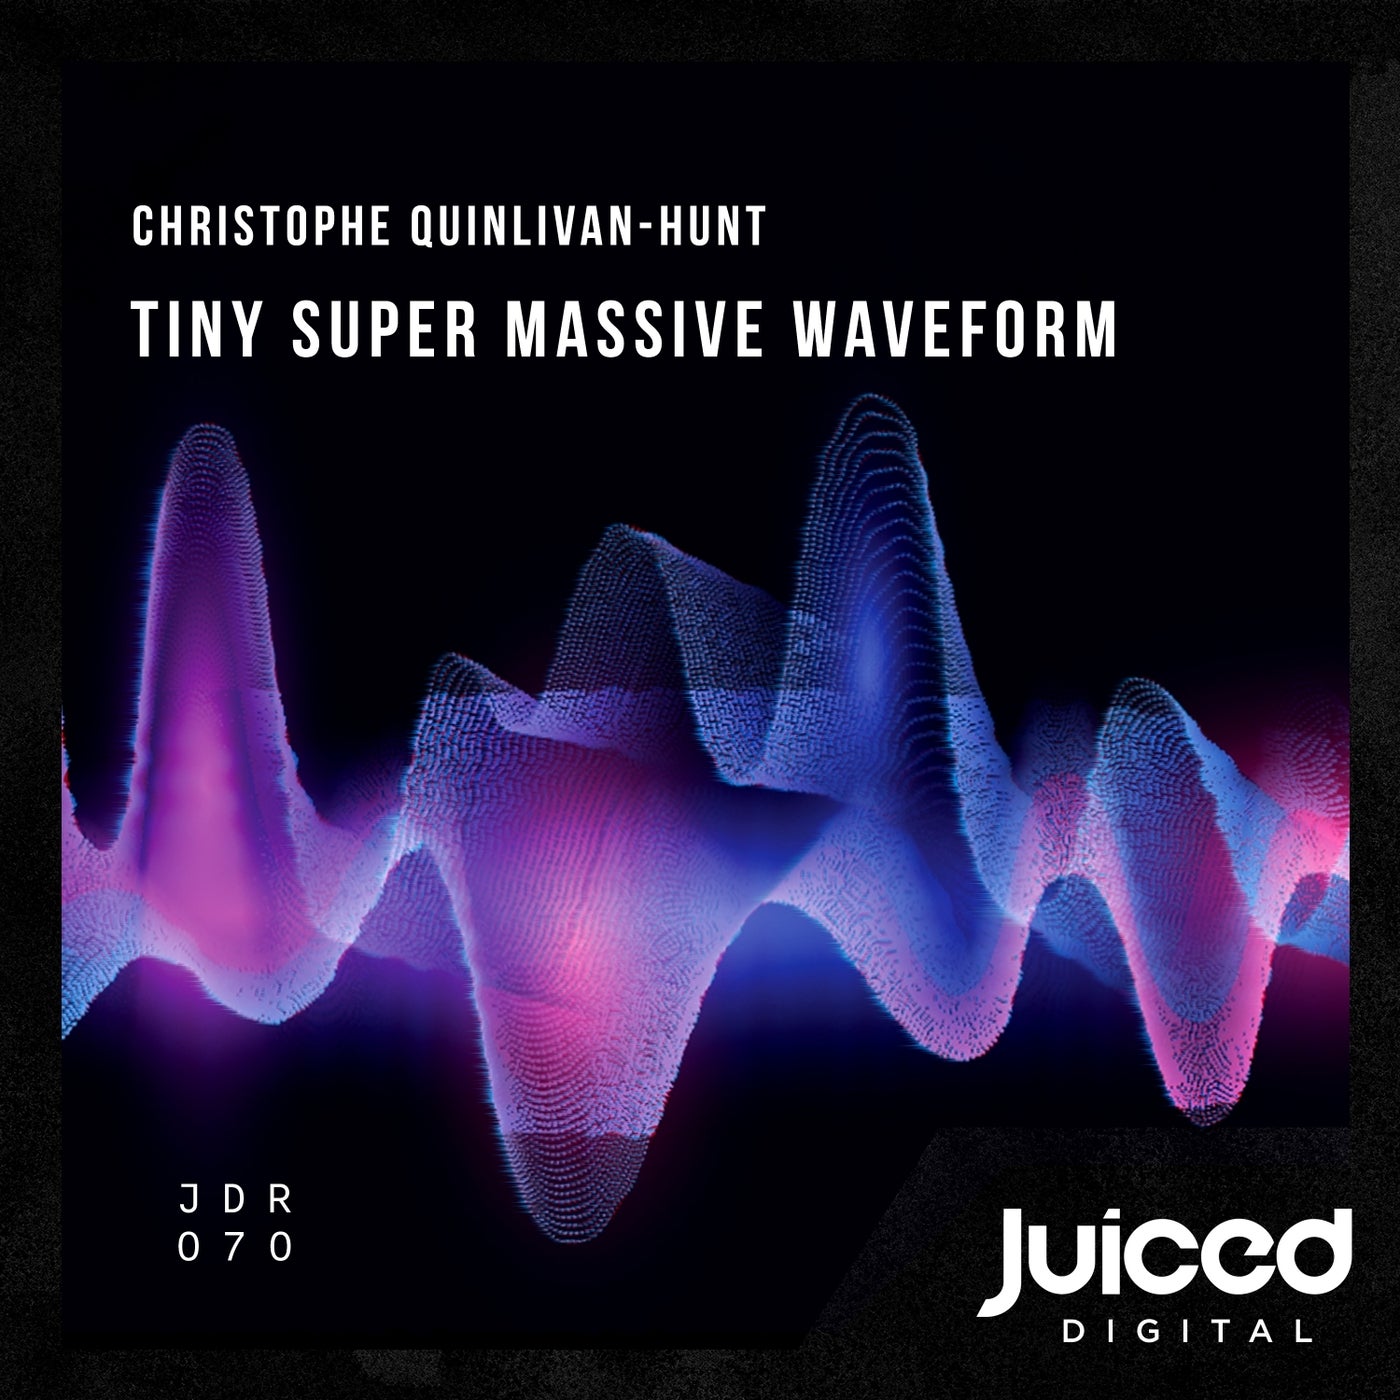 Tiny Super Massive Waveform